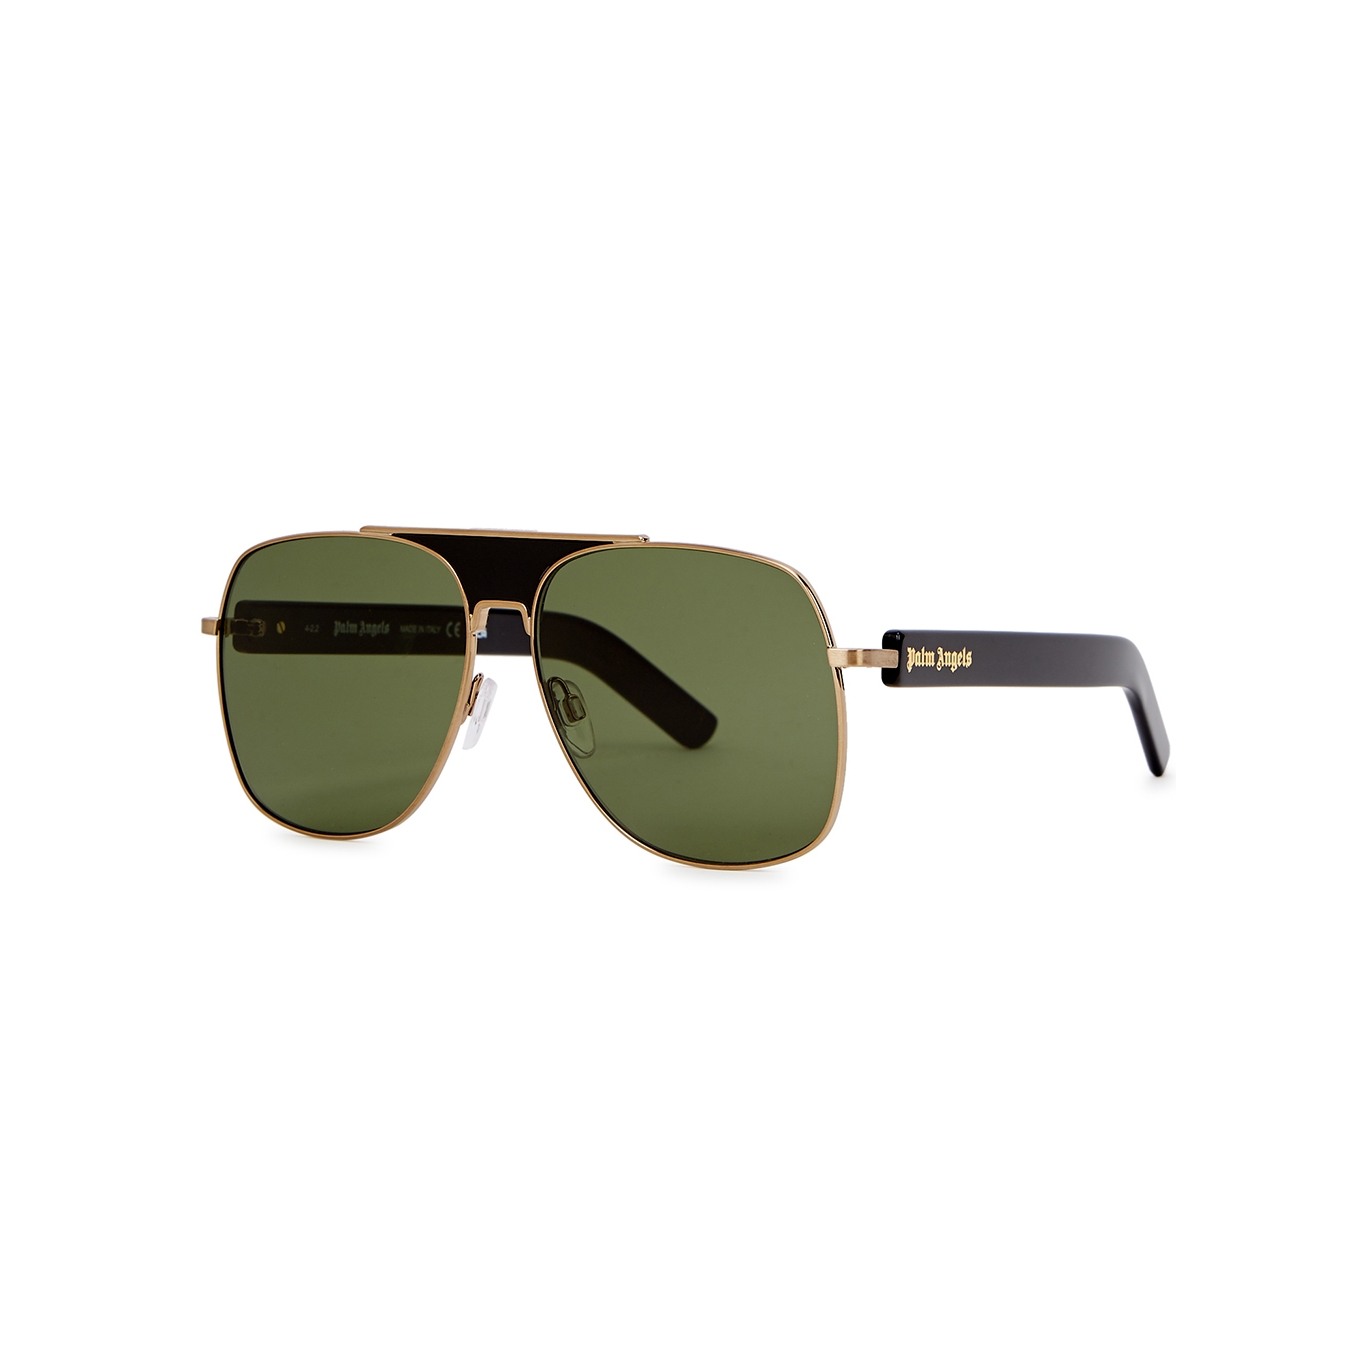 Palm Angels Bay Oversized Aviator-style Sunglasses, Sunglasses, Green